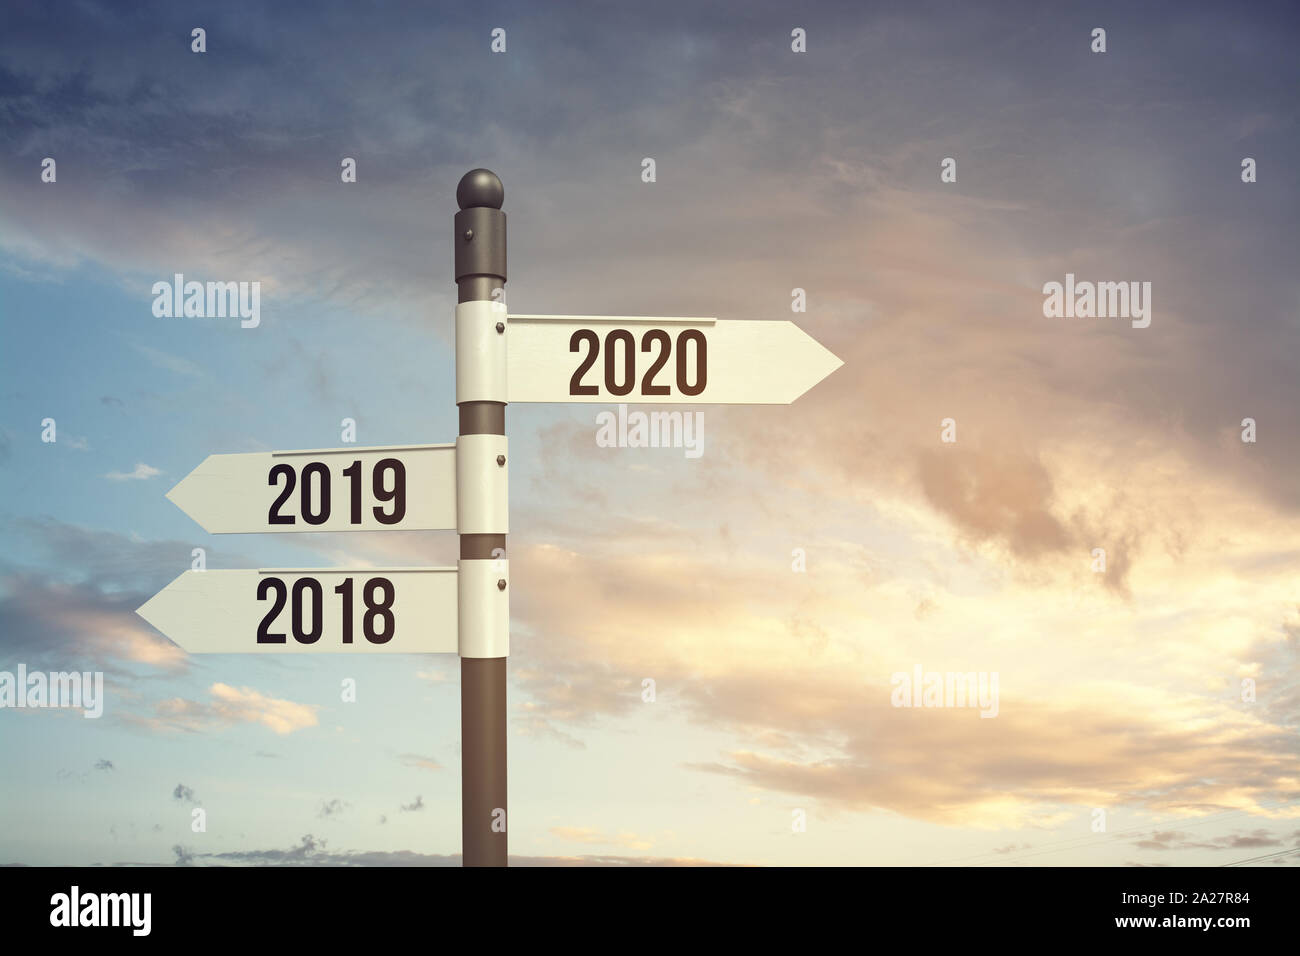 2020 new start, new hope, new beginning with new year. Stock Photo